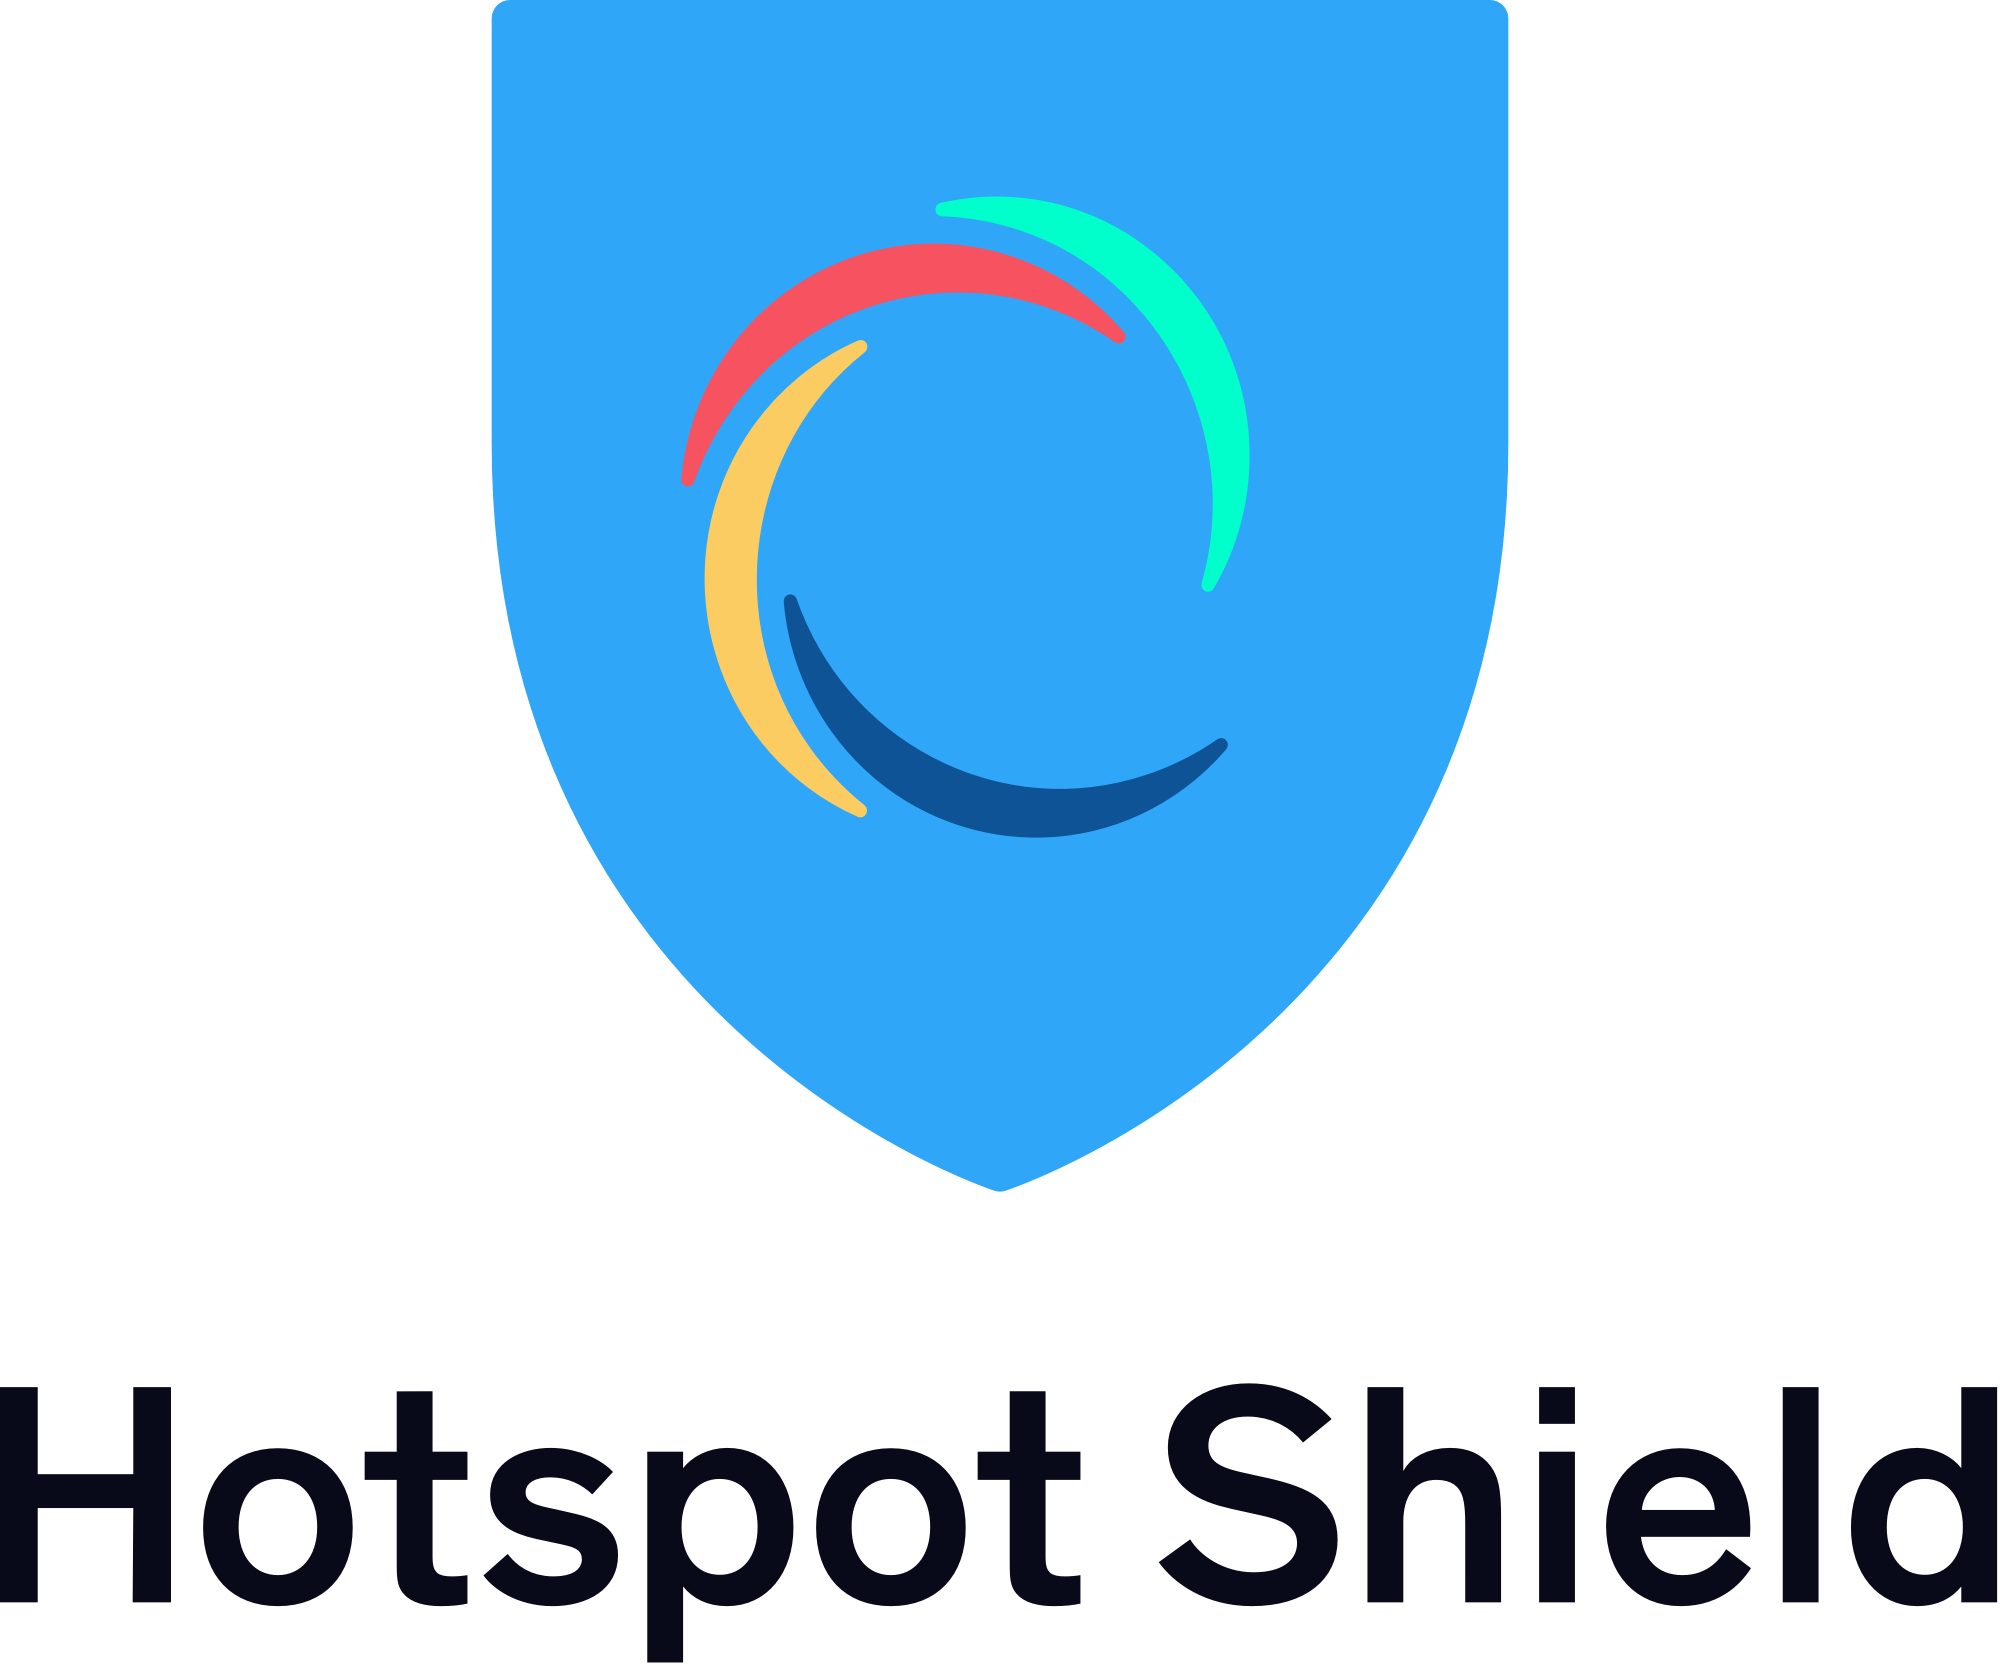 download hotspot shield free for mac